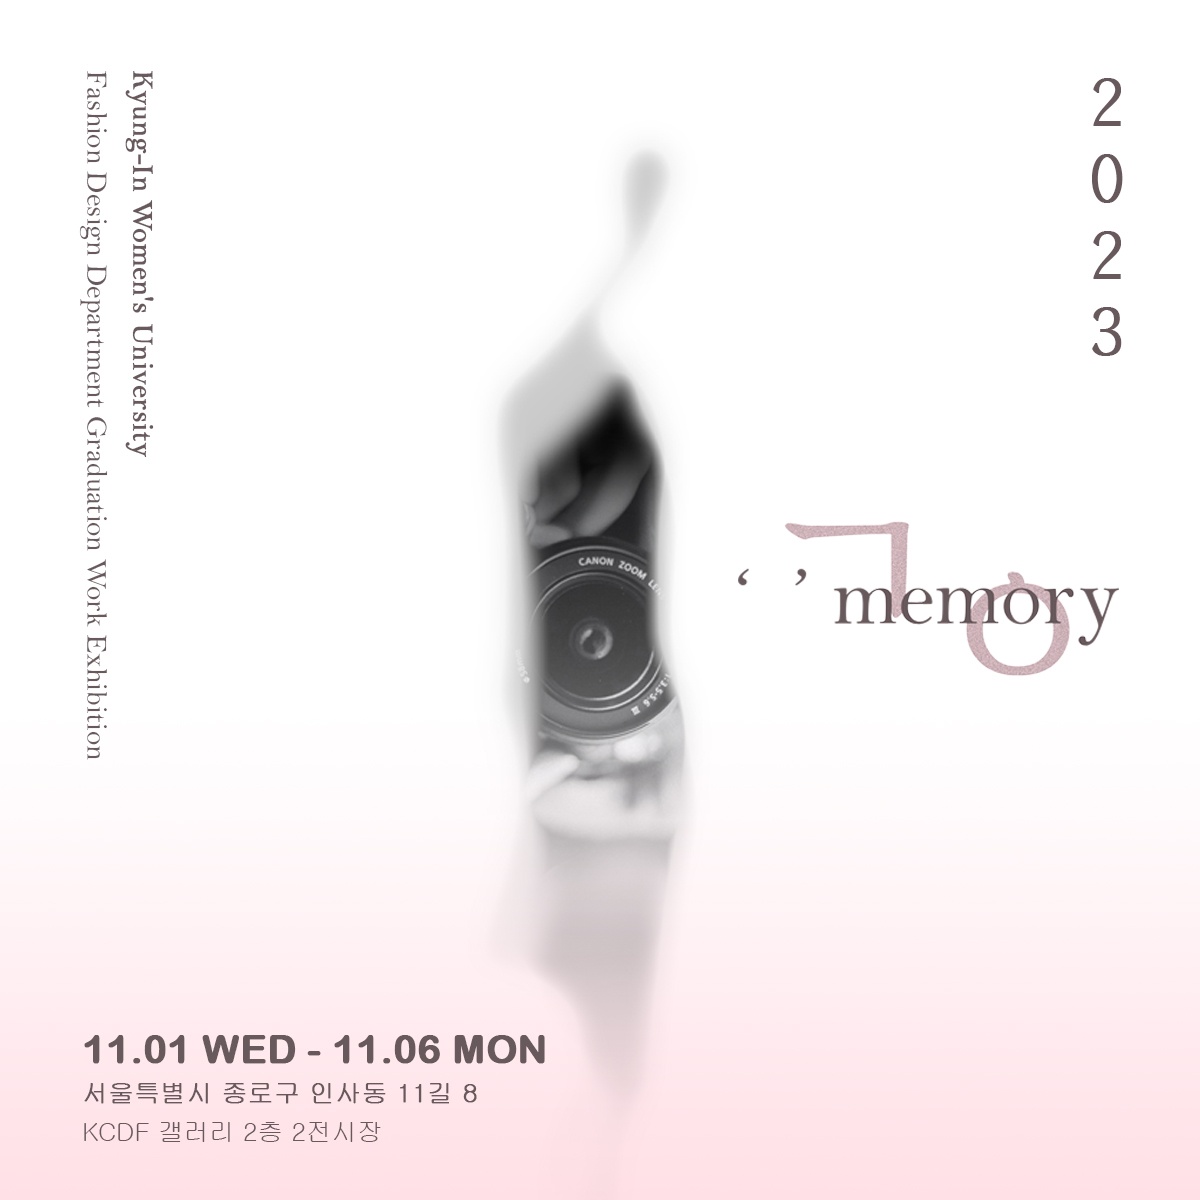 Kyung-In Women's University Fashion Designer Department Graduation Work Exhibition 2023 '' memory ㄱㅇ 11.1 WED - 11.06 MON 서울특별시 종로구 인사동 11길 8 KCDF 갤러리 2층 2전시장